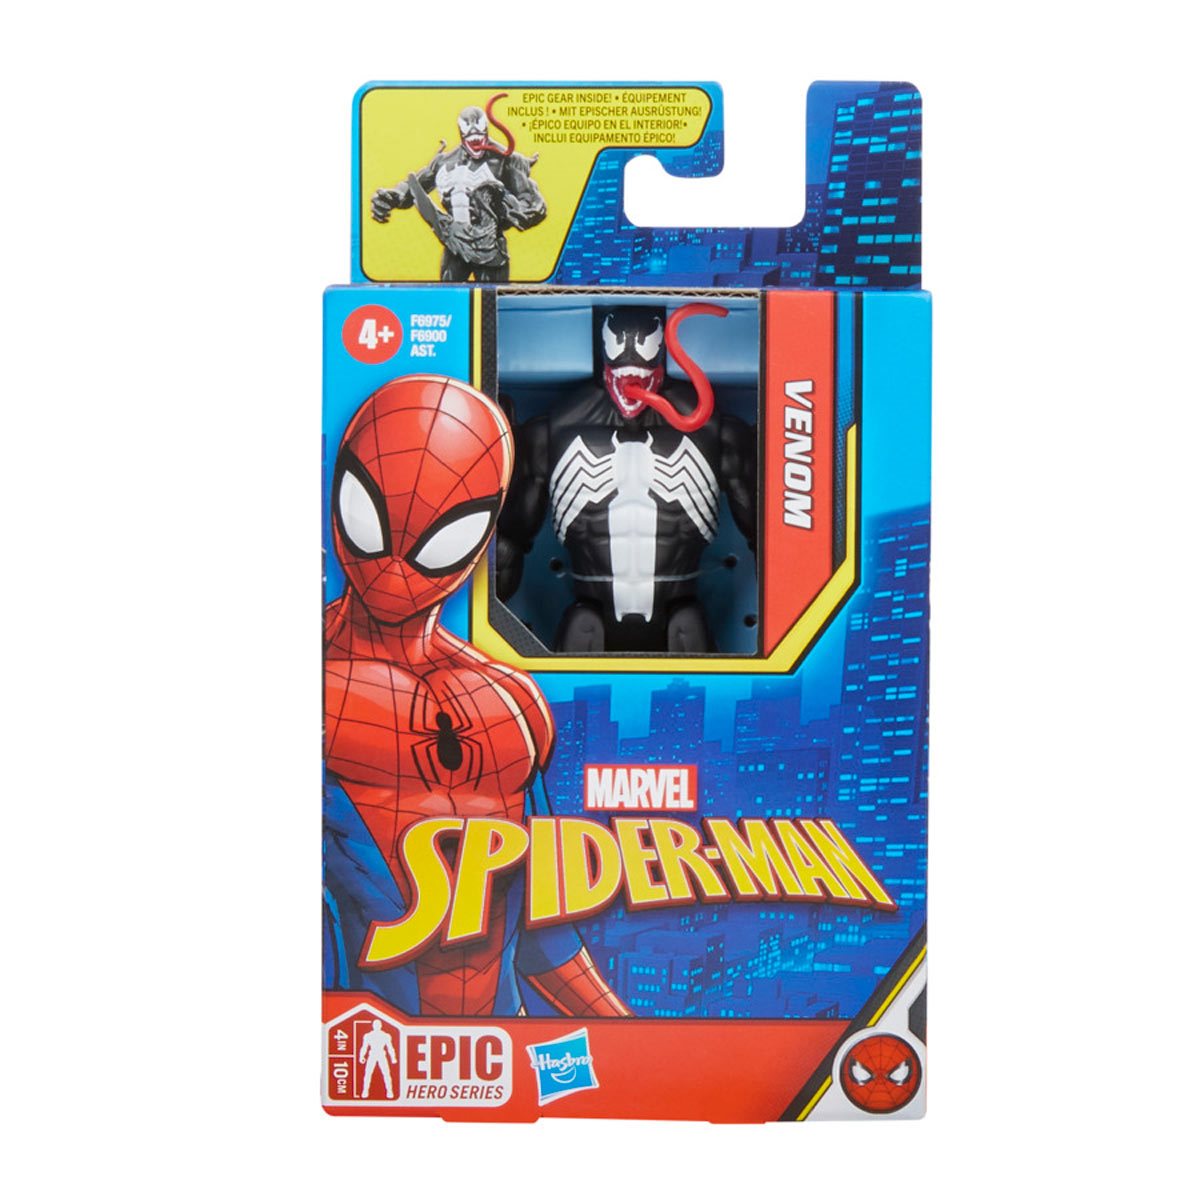 Spider-Man Epic Hero Series 4-Inch Action Figures